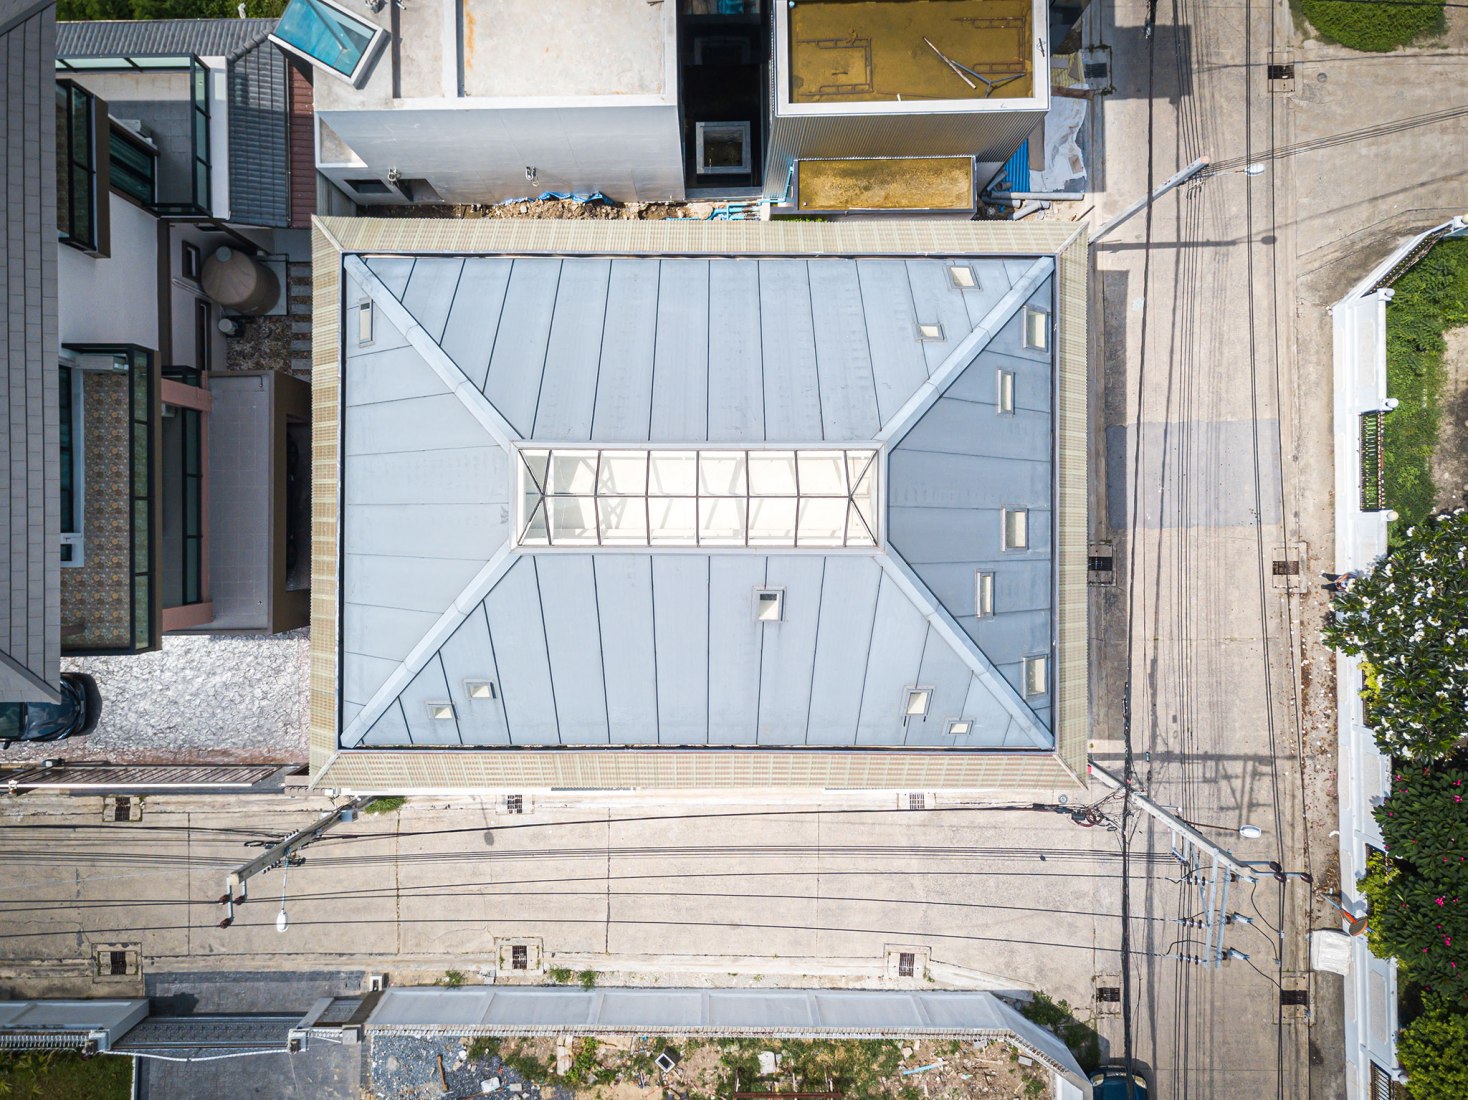 ICE SU house by Junsekino Architect and Design. Photograph by Spaceshift Studio.